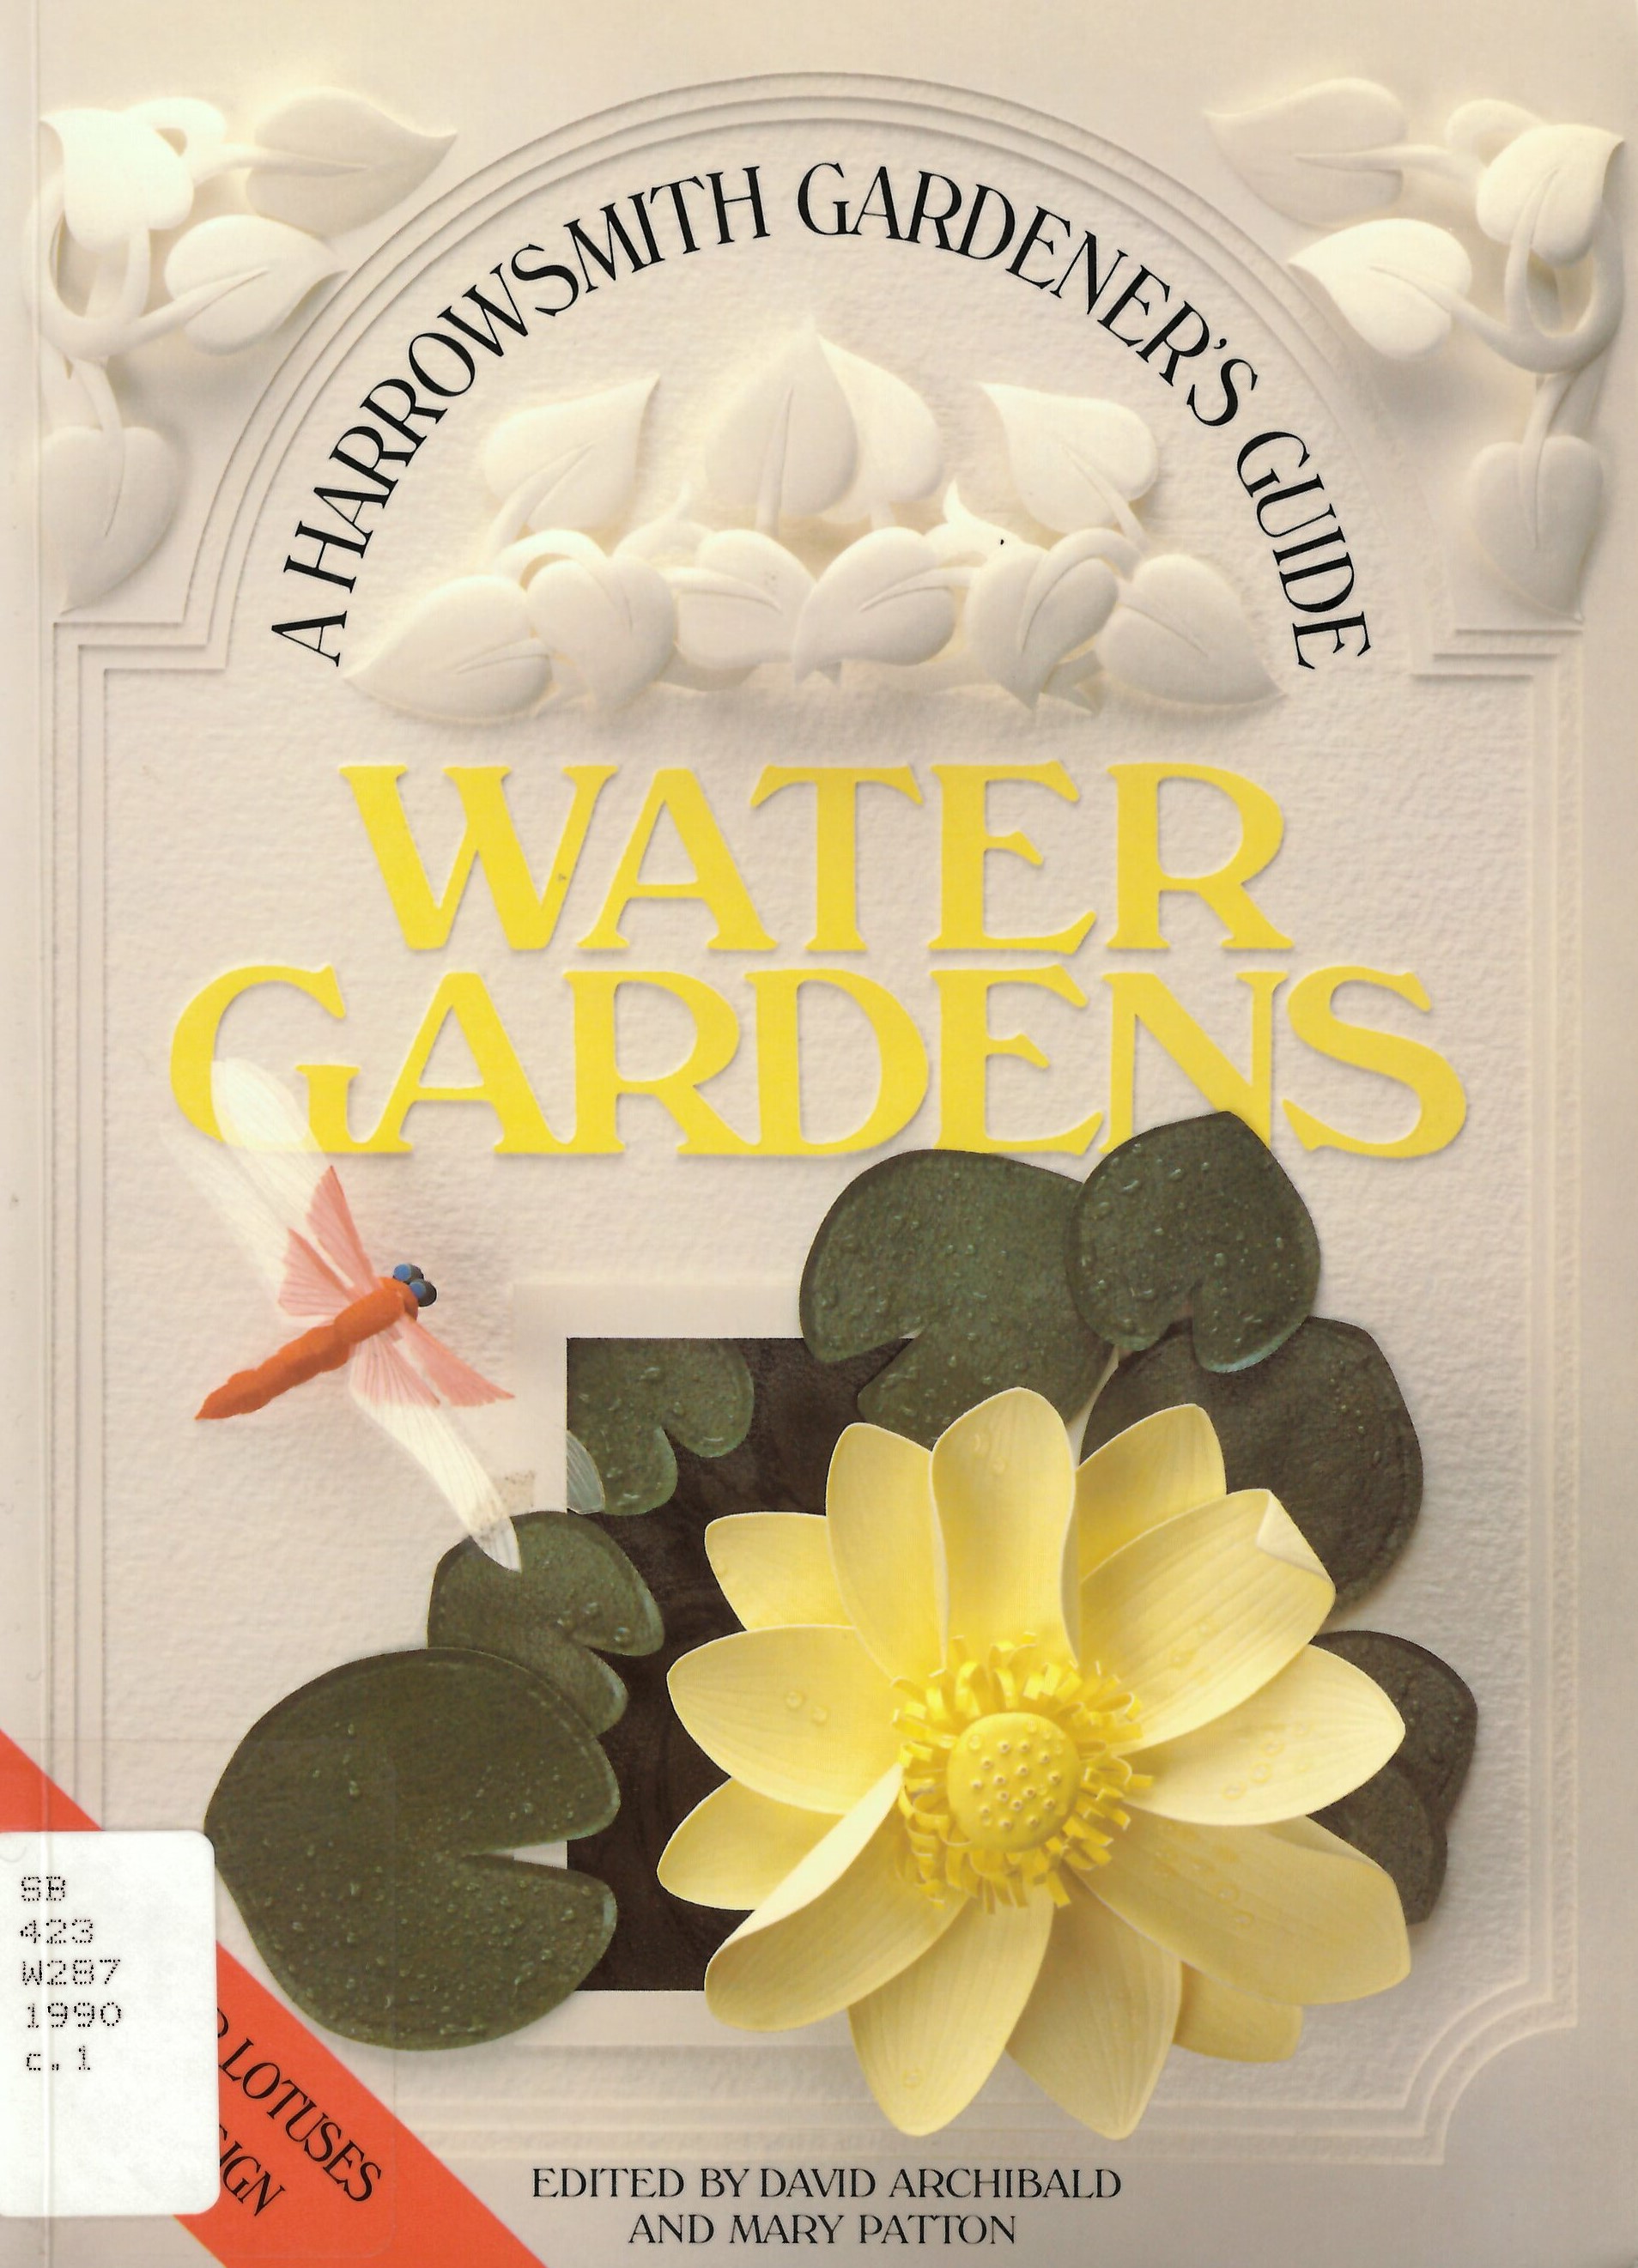 Water gardens